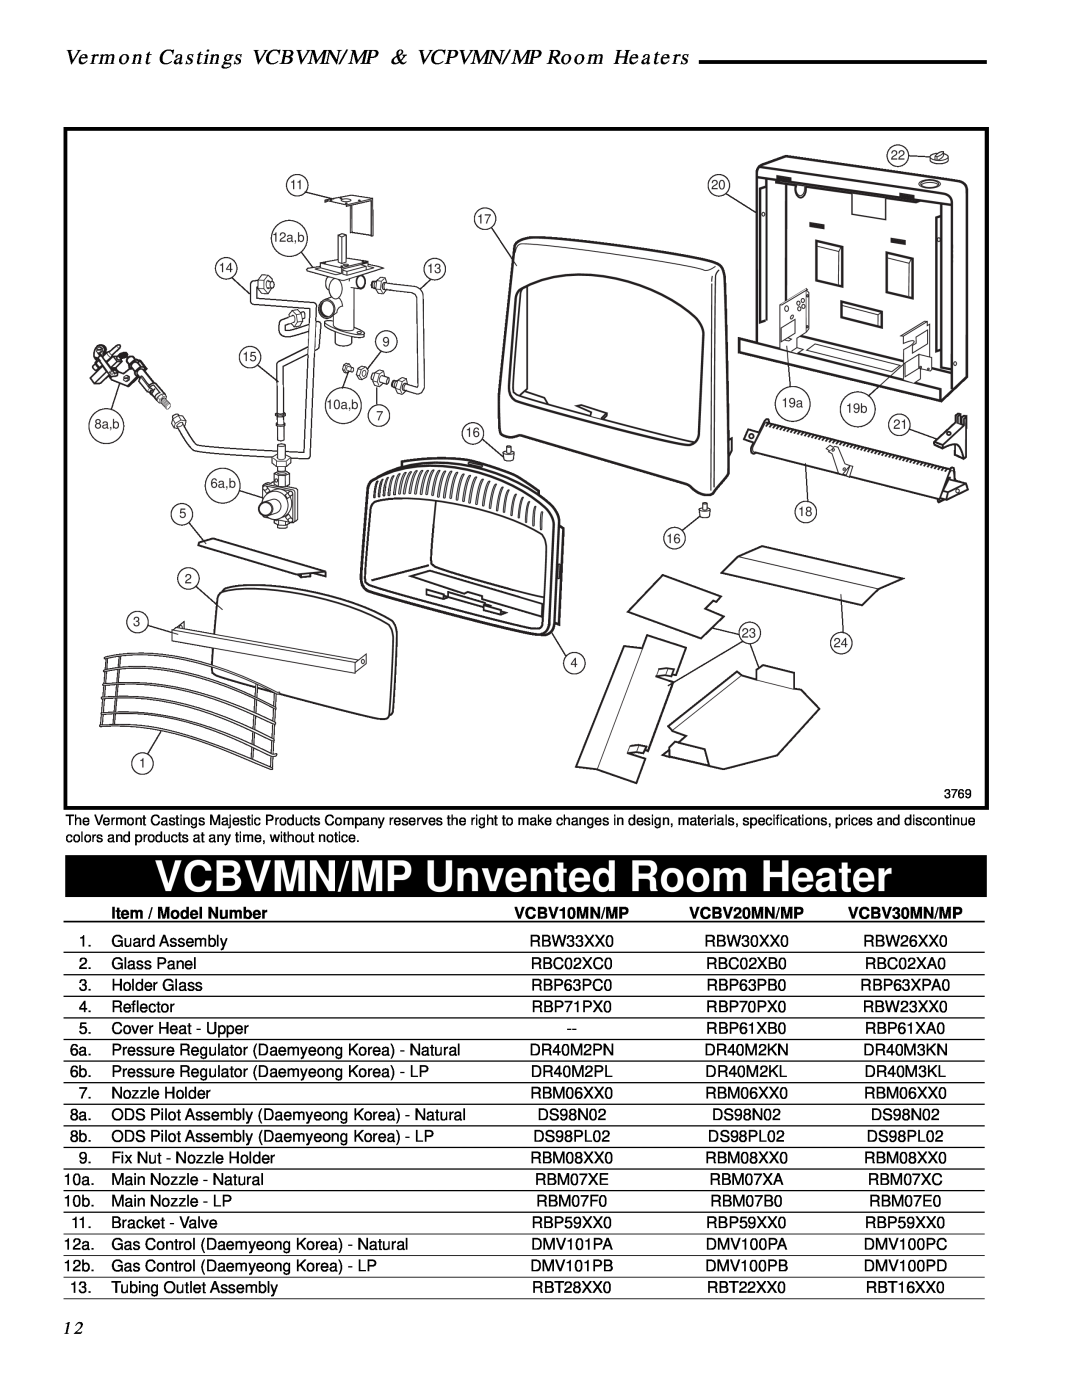 Vermont Casting VCPV30 VCBVMN/MP Unvented Room Heater, Item / Model Number, VCBV10MN/MP, VCBV20MN/MP, VCBV30MN/MP 